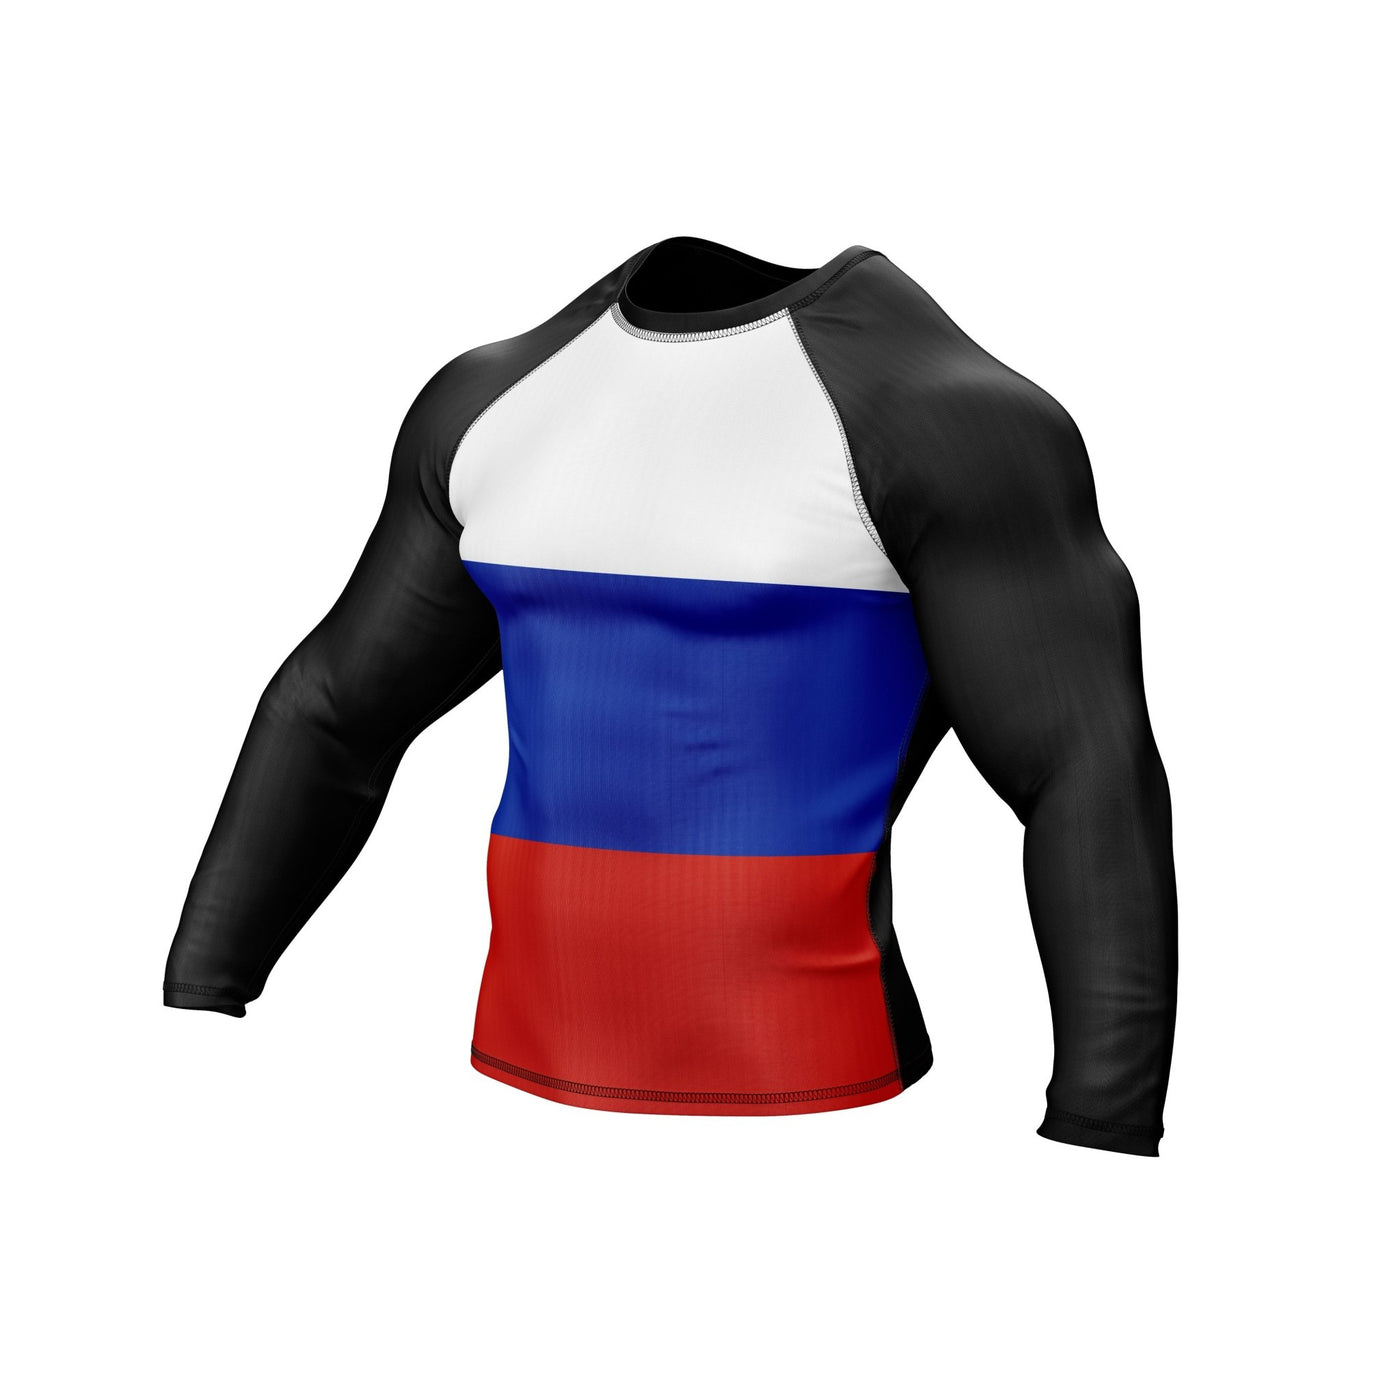 Russia Patriotic Rash Guard For Men/Women - Summo Sports